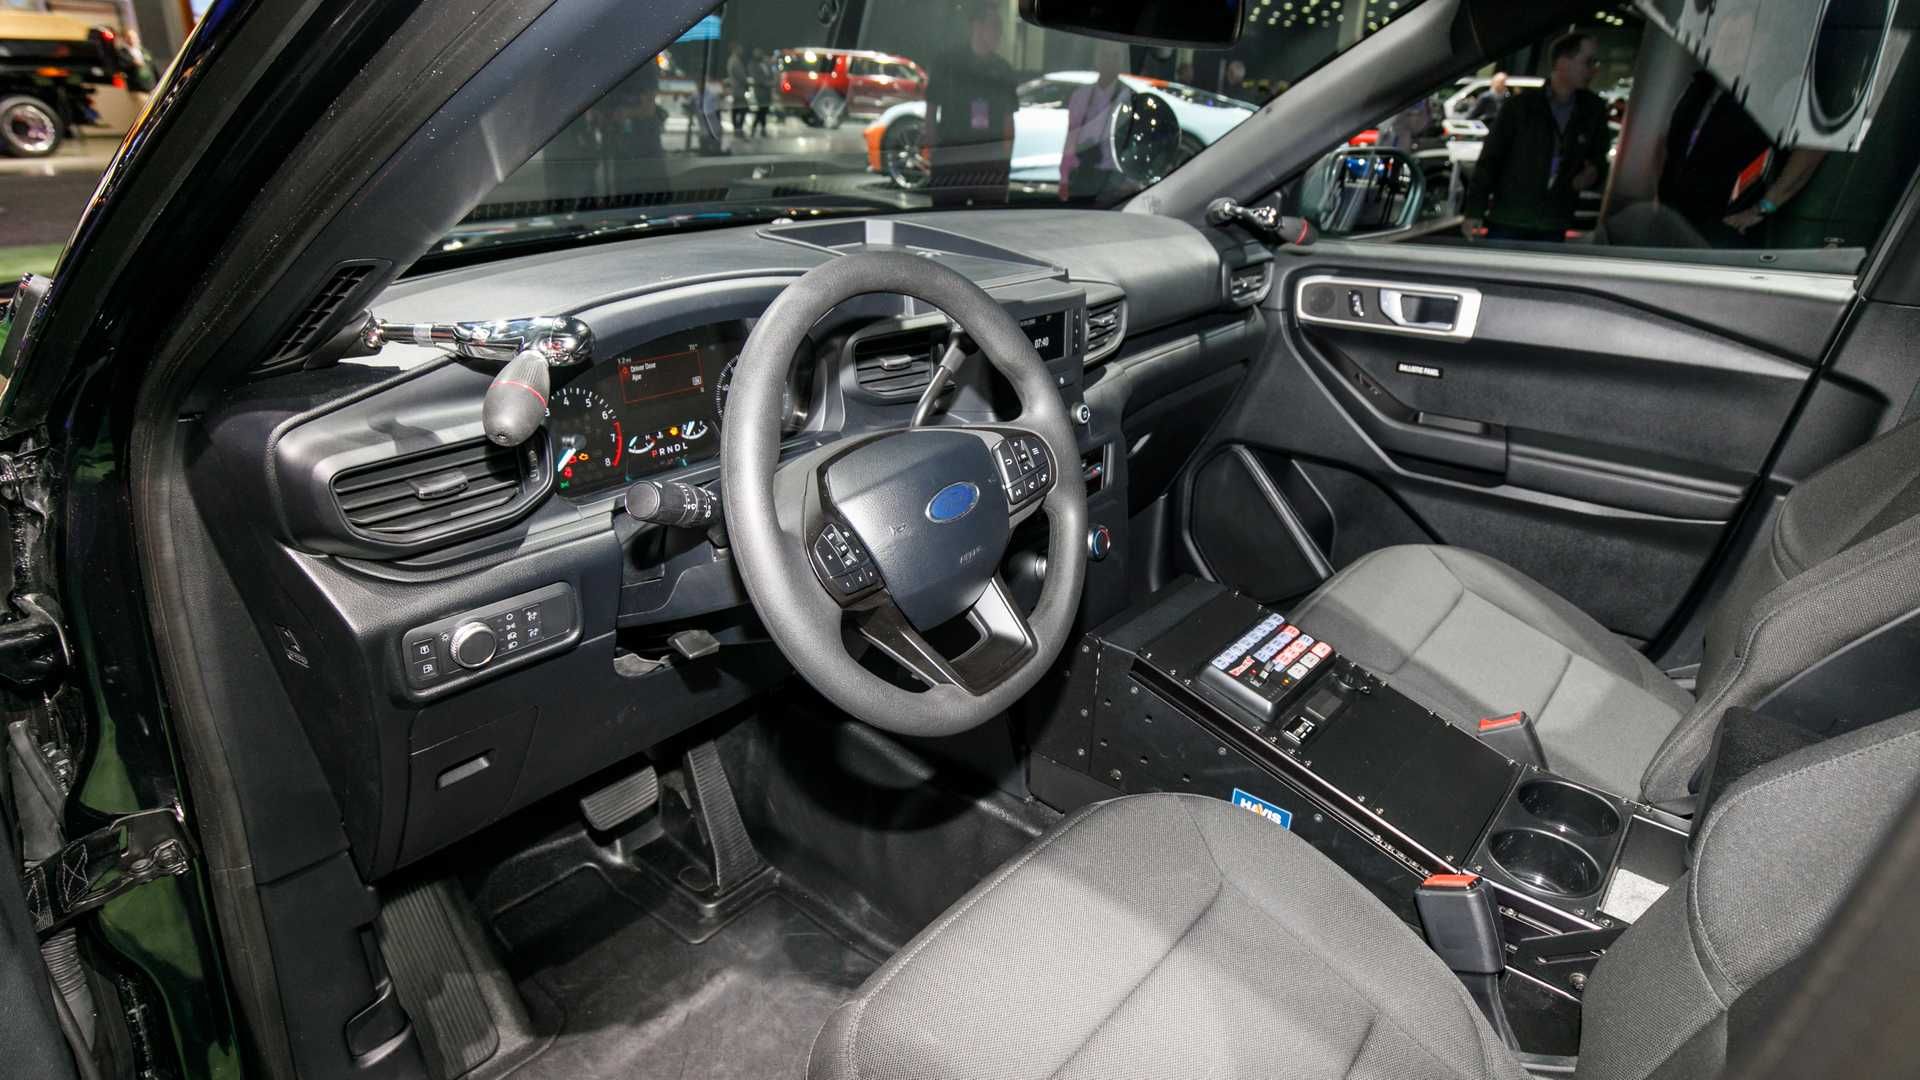 Ford Police Interceptor 2020 interior